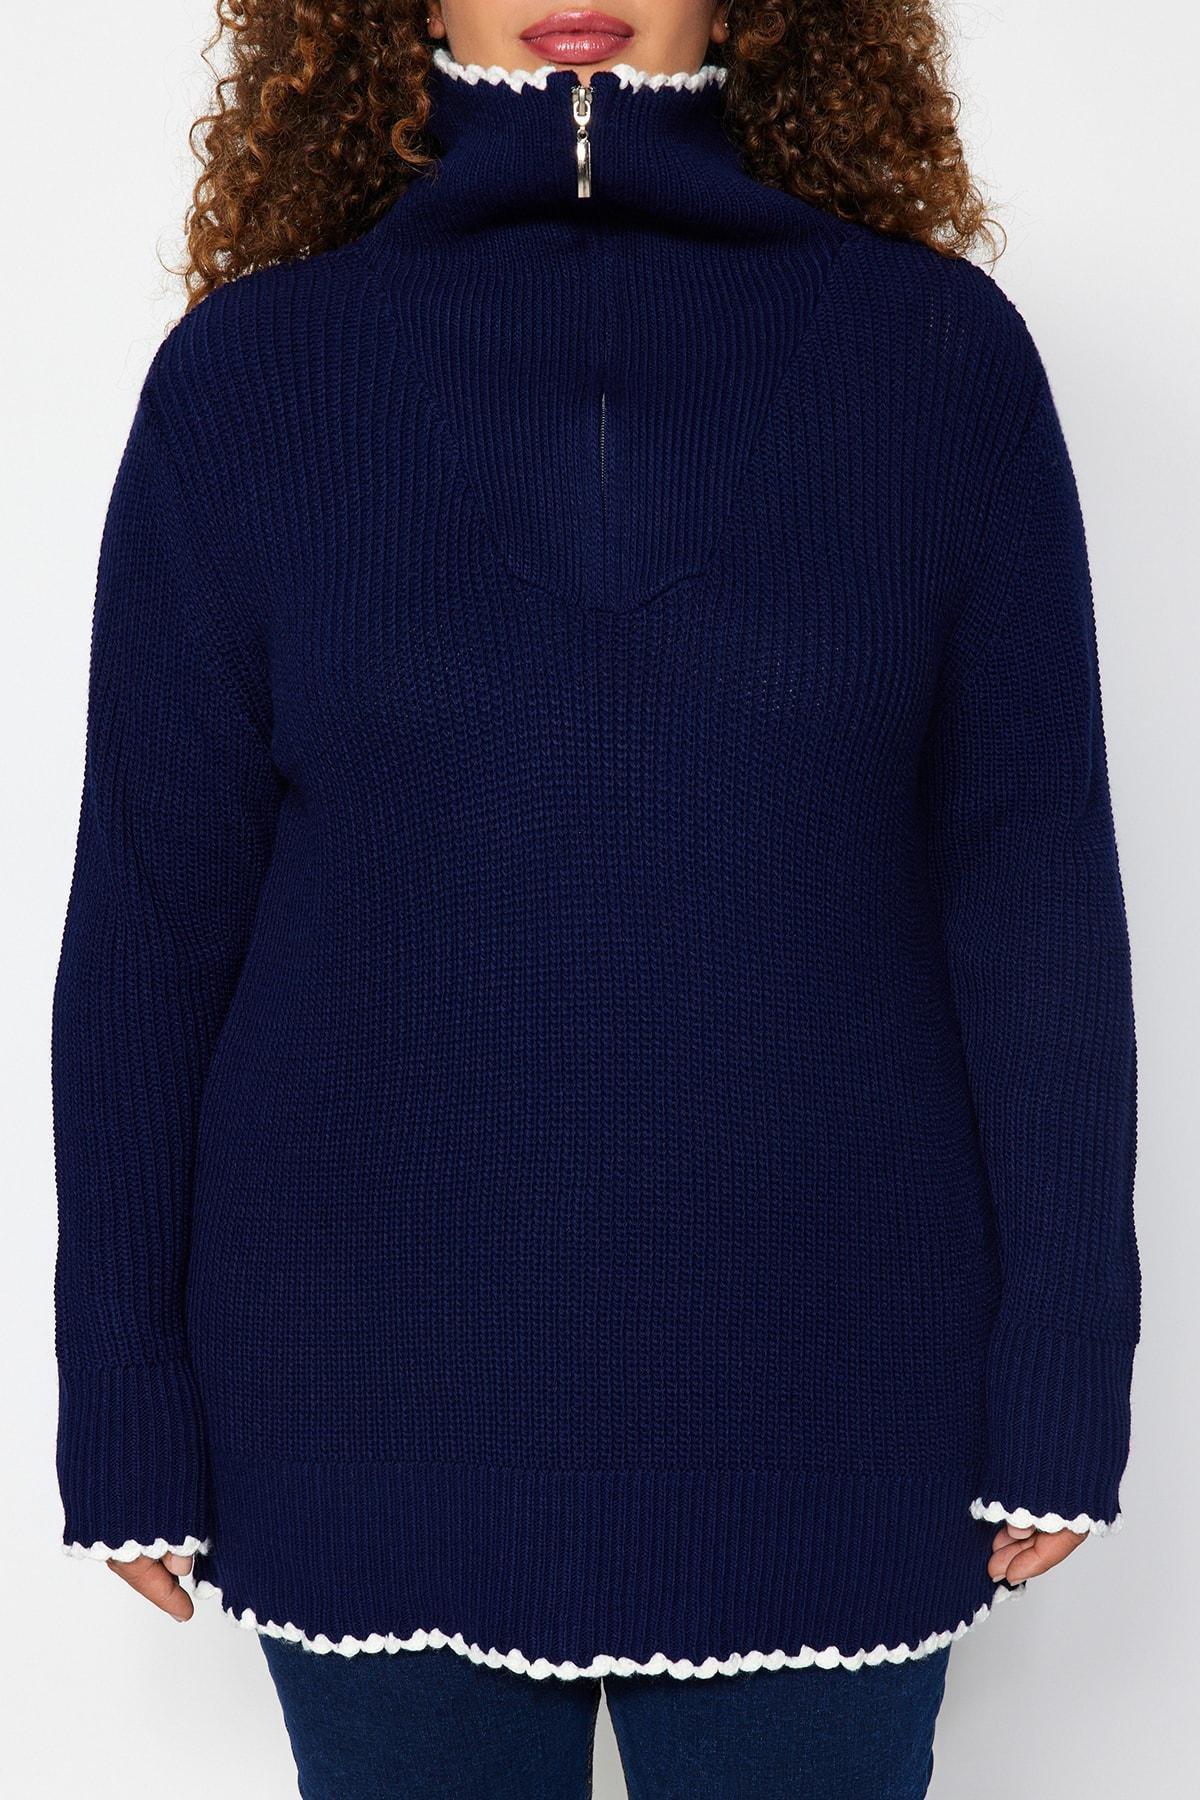 Trendyol - Navy Oversized Zippered Knitted Sweater